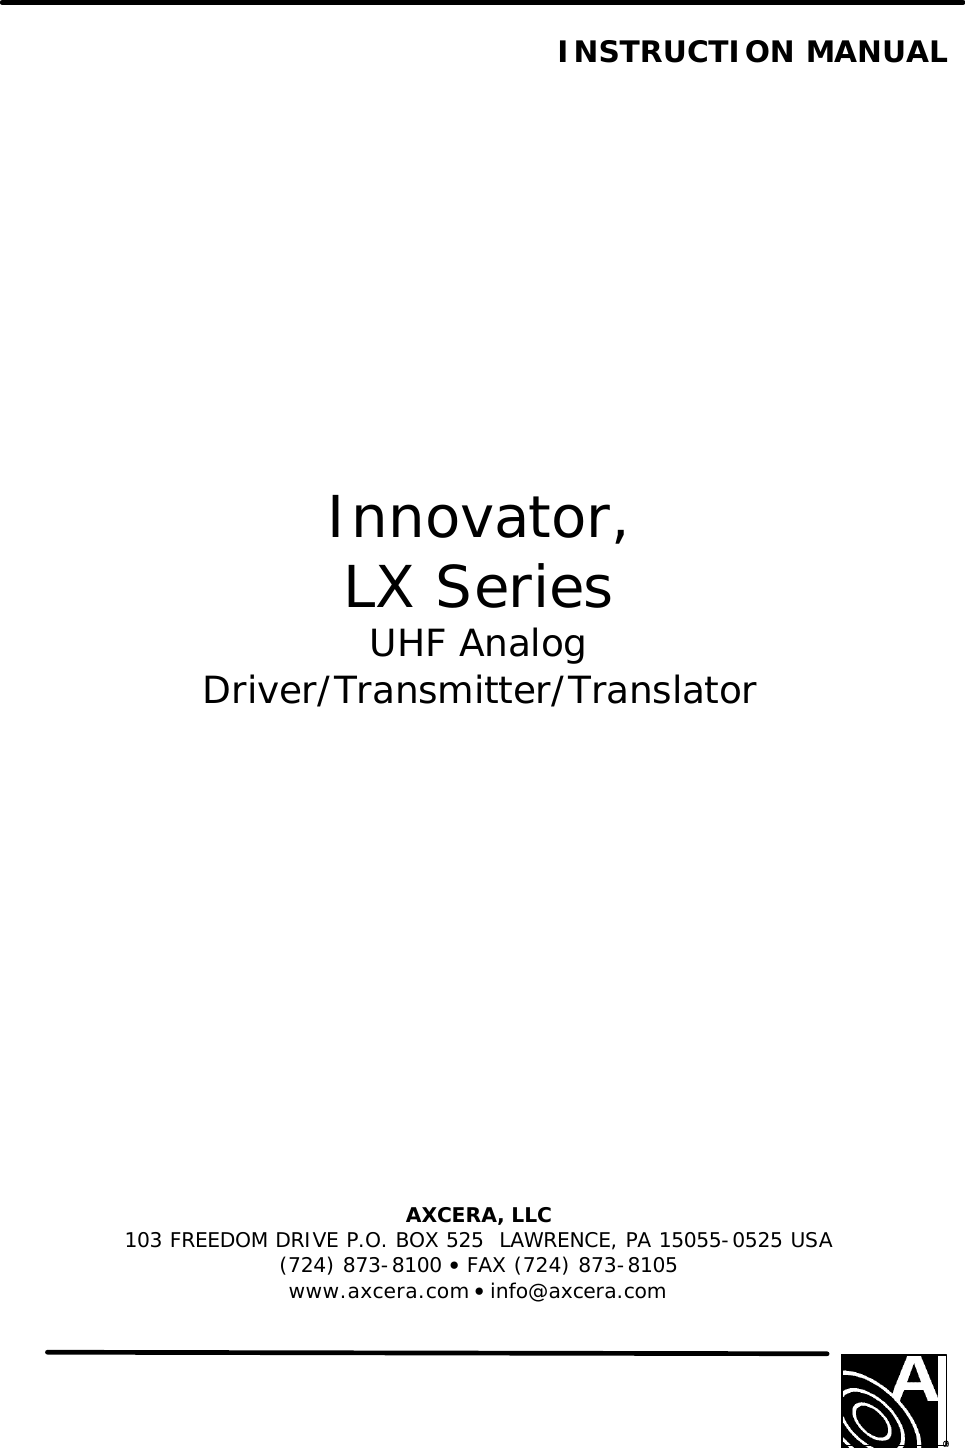   INSTRUCTION MANUAL                  Innovator, LX Series UHF Analog Driver/Transmitter/Translator               AXCERA, LLC  103 FREEDOM DRIVE P.O. BOX 525  LAWRENCE, PA 15055-0525 USA (724) 873-8100 • FAX (724) 873-8105 www.axcera.com • info@axcera.com     